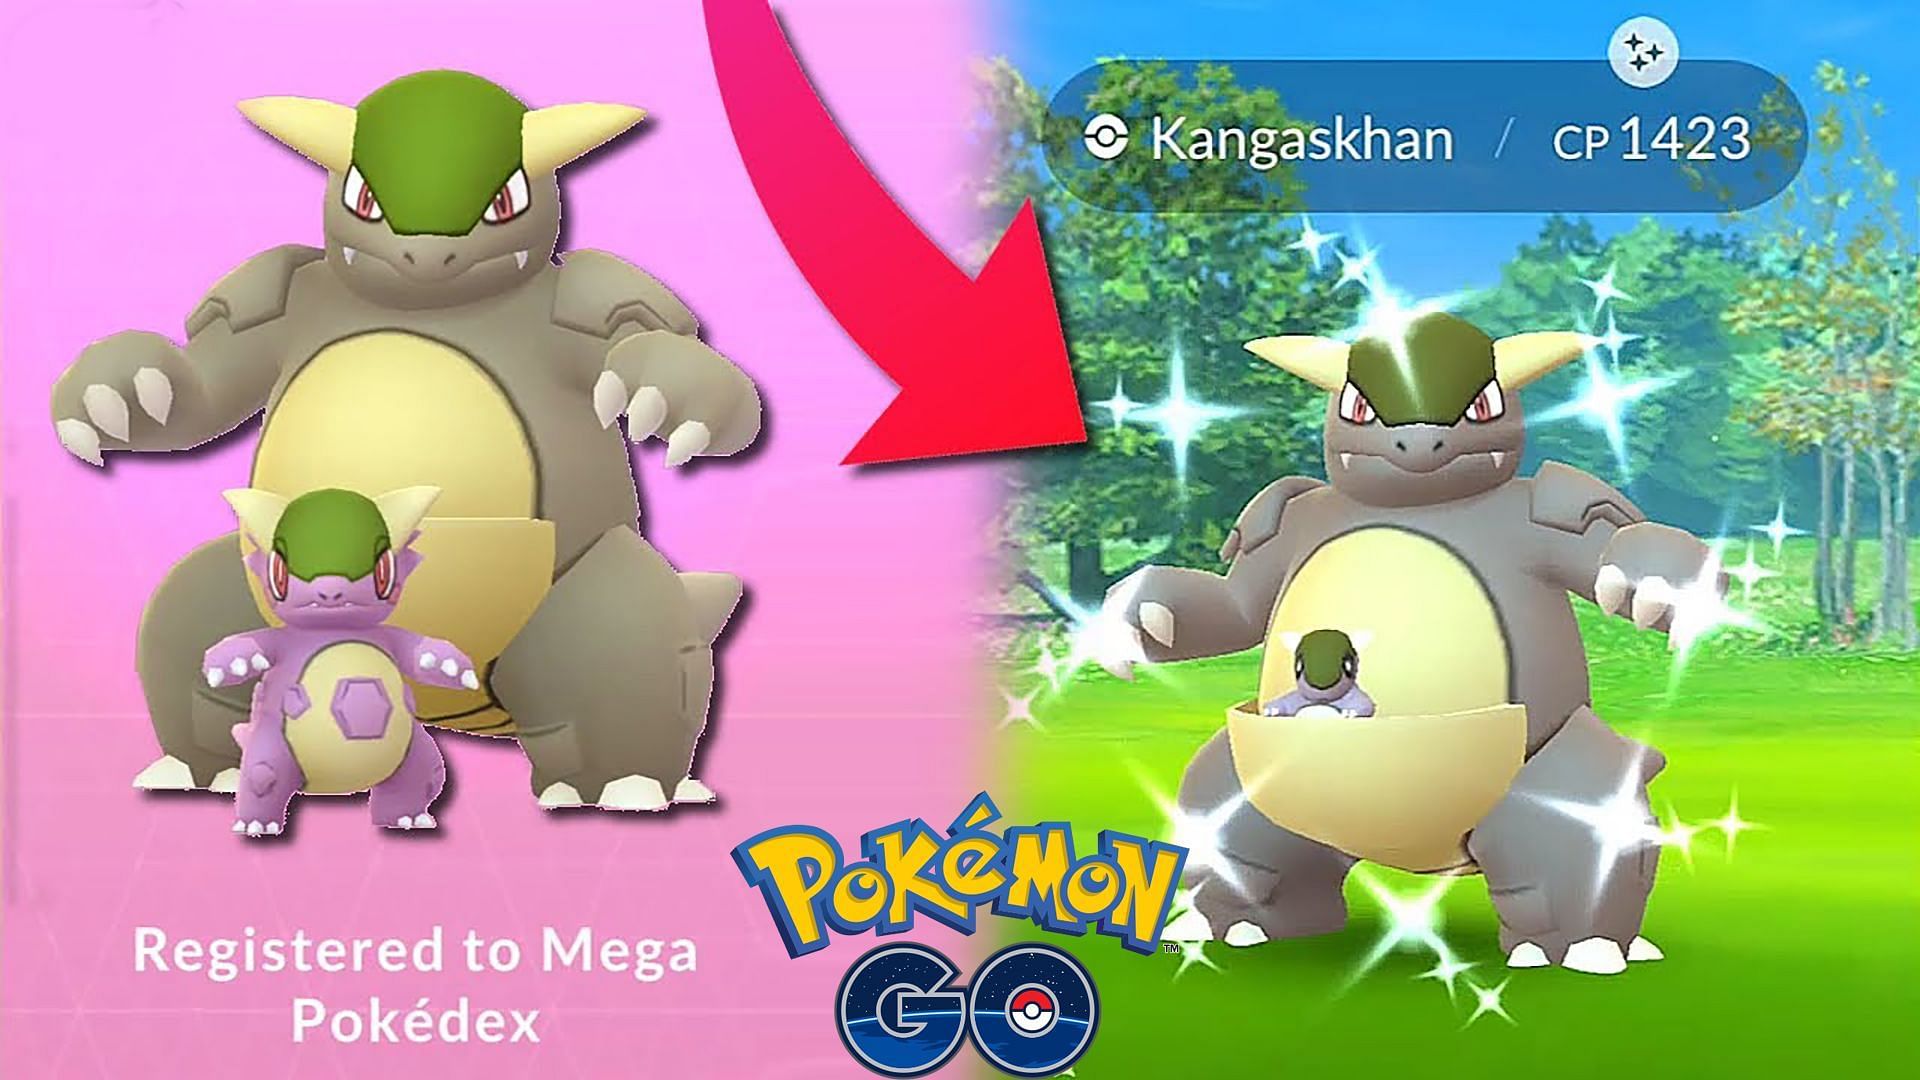 How To Beat The Mega Kangaskhan Raid In Pokemon Go